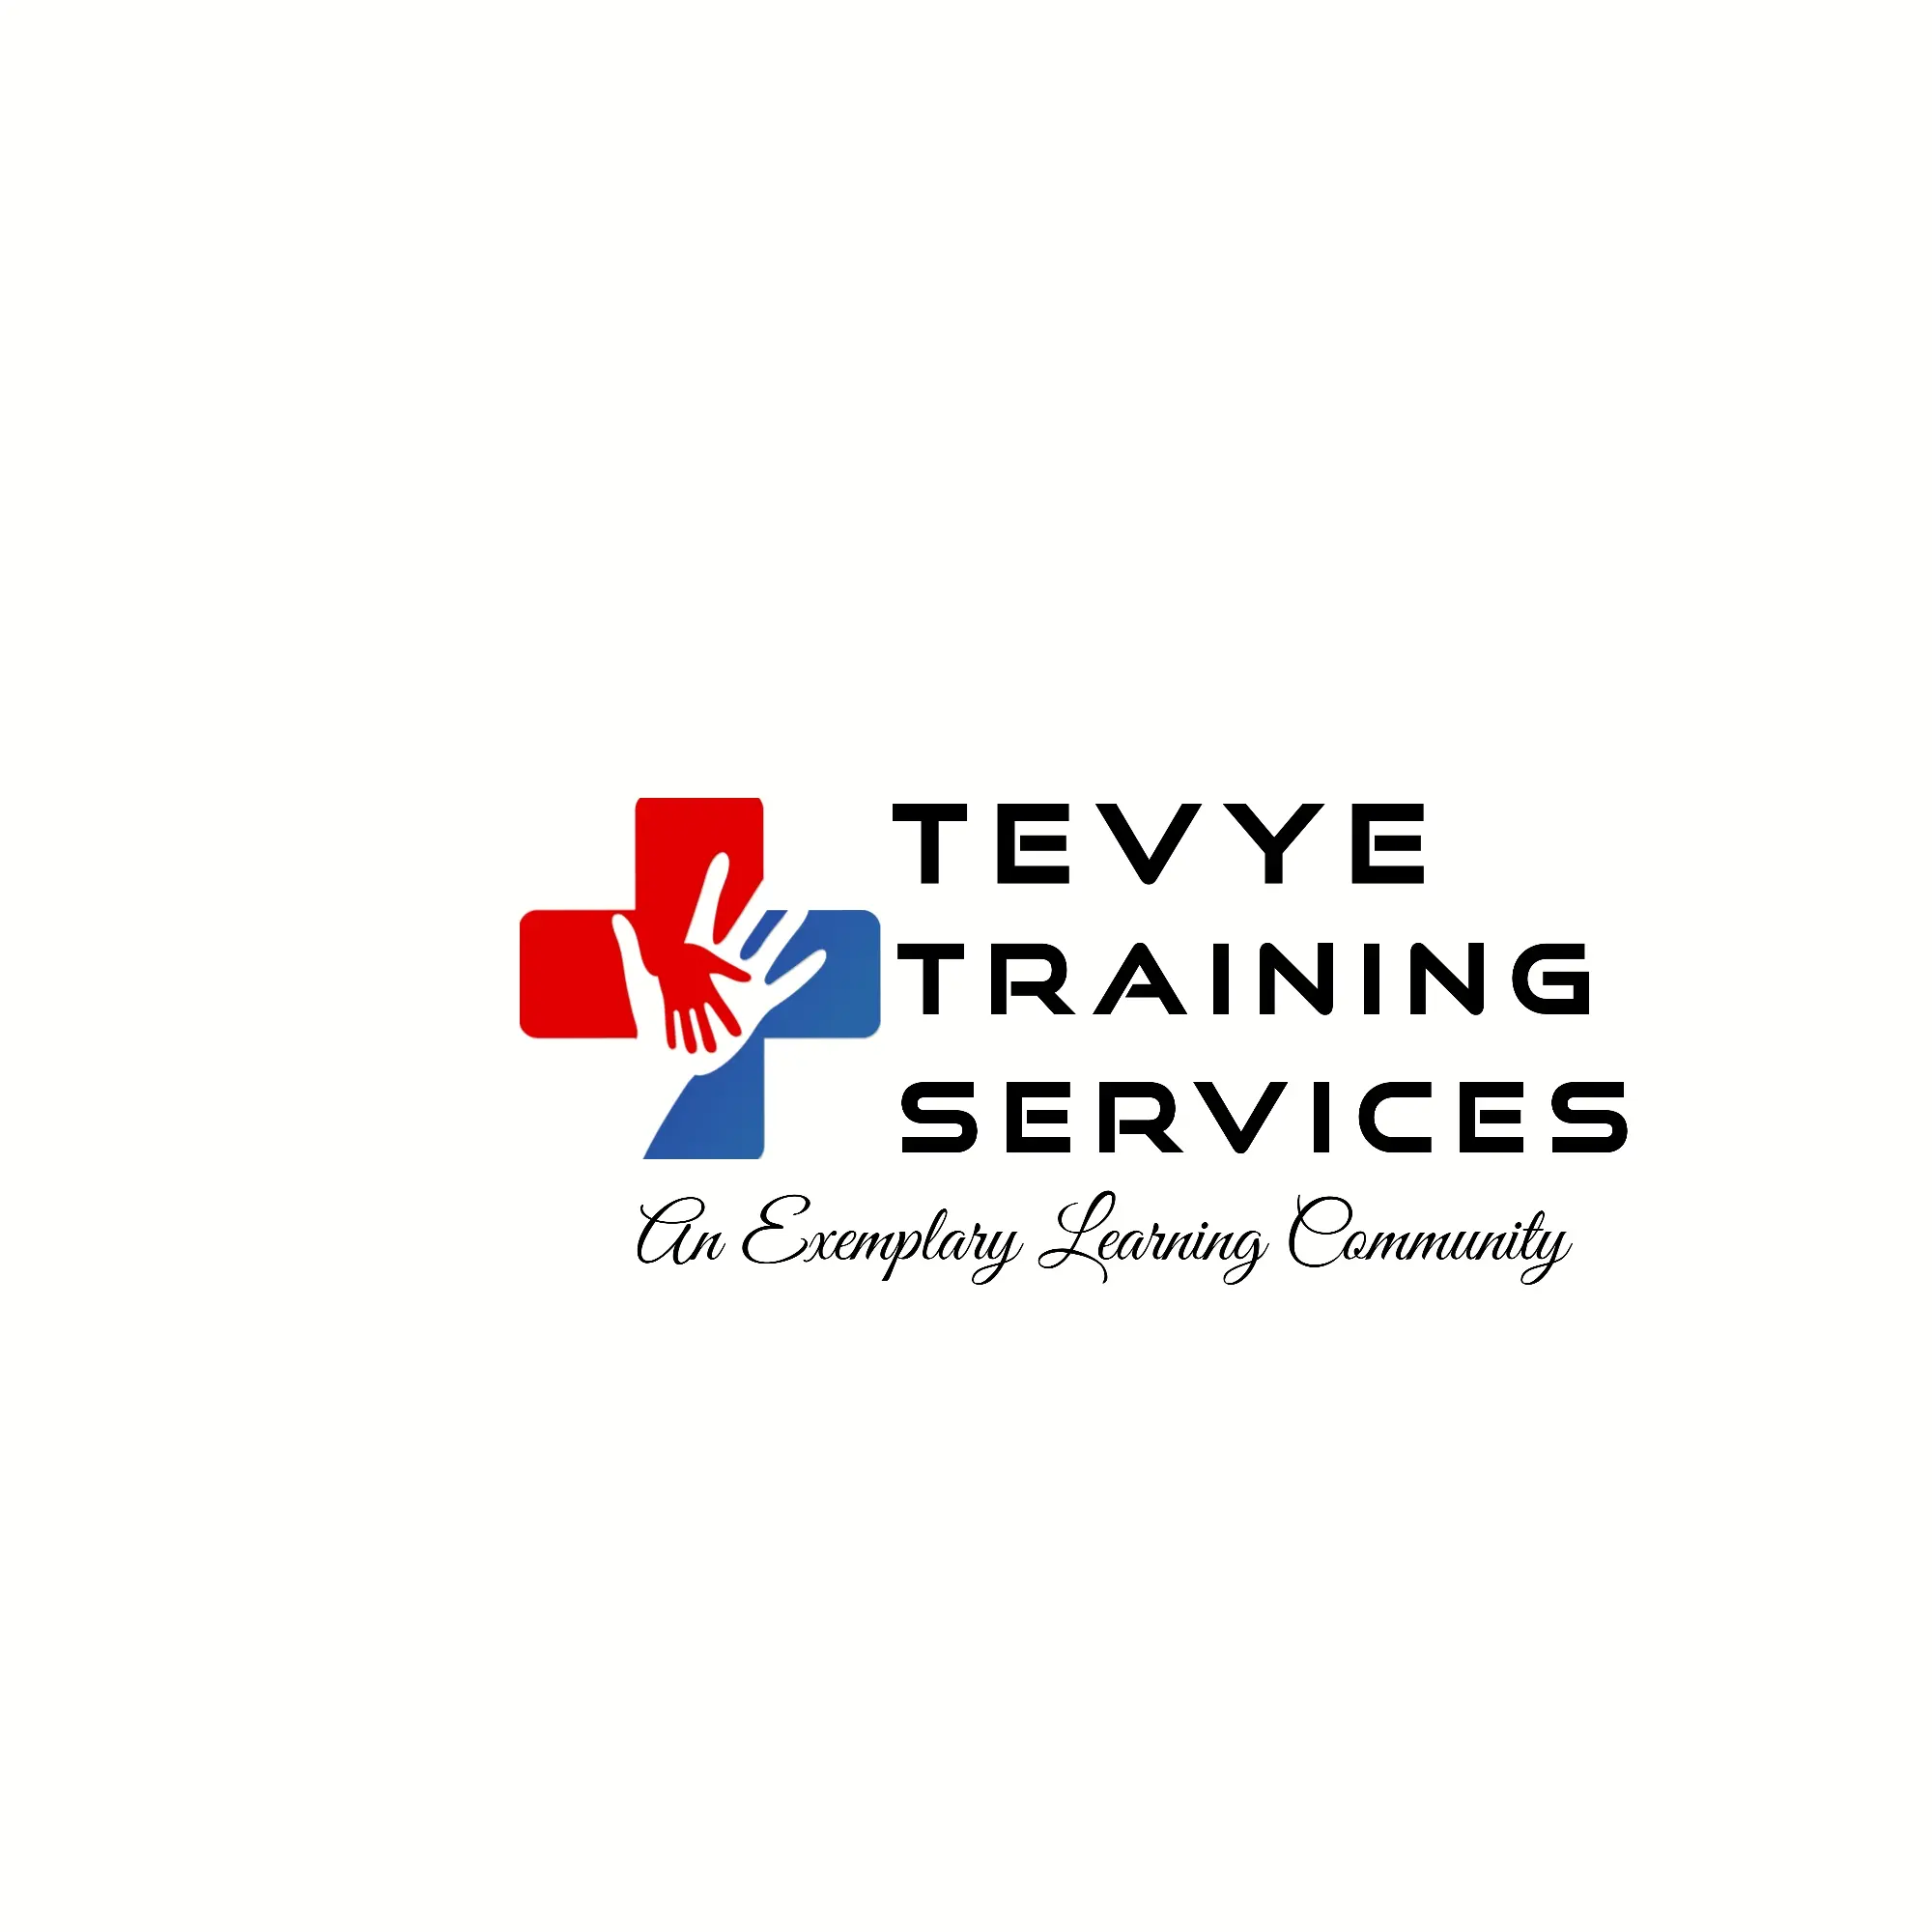 TEVYE TRAINING SERVICES